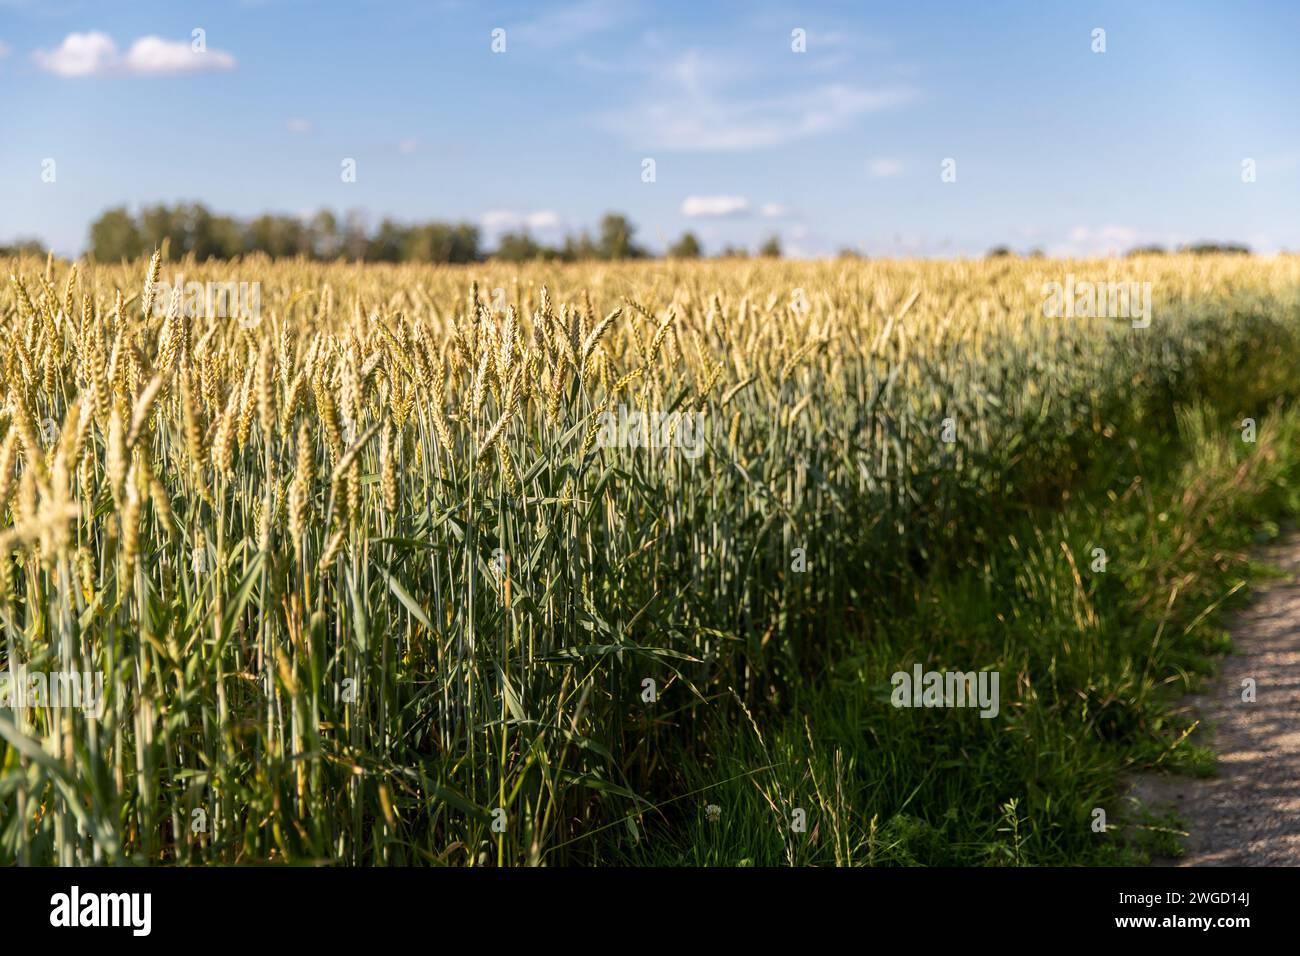 Weizenfeld im Sommer im Wachstum Stock Photo